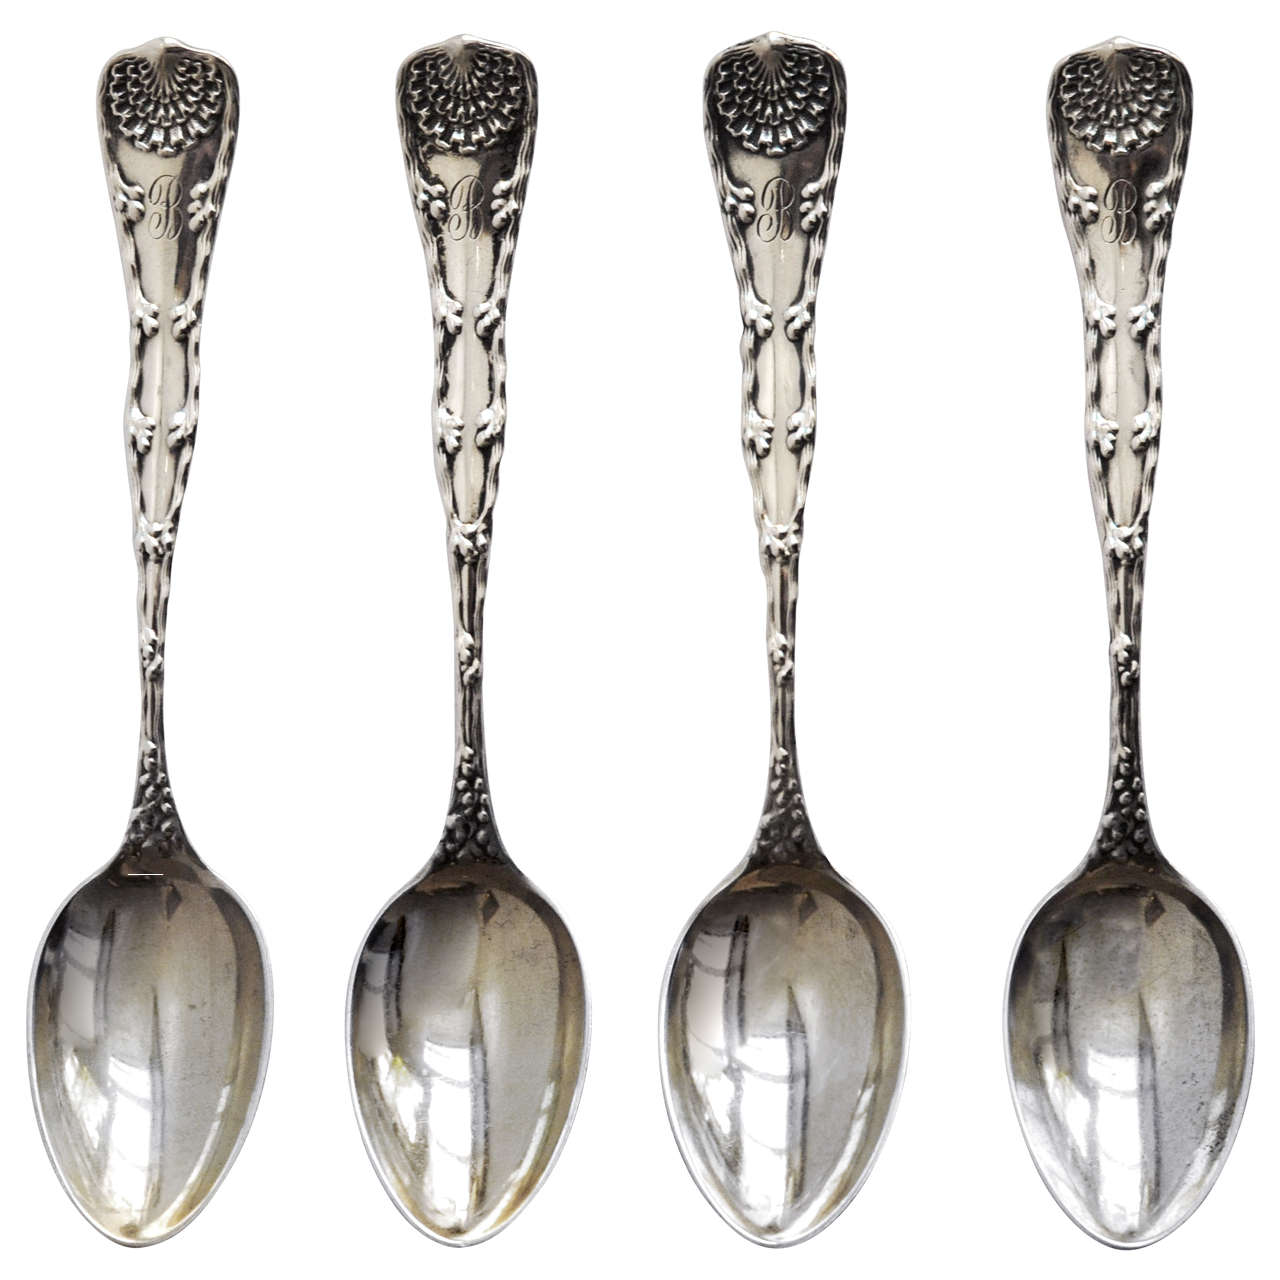 Tiffany & Co. Gilt Sterling Demitasse Spoons